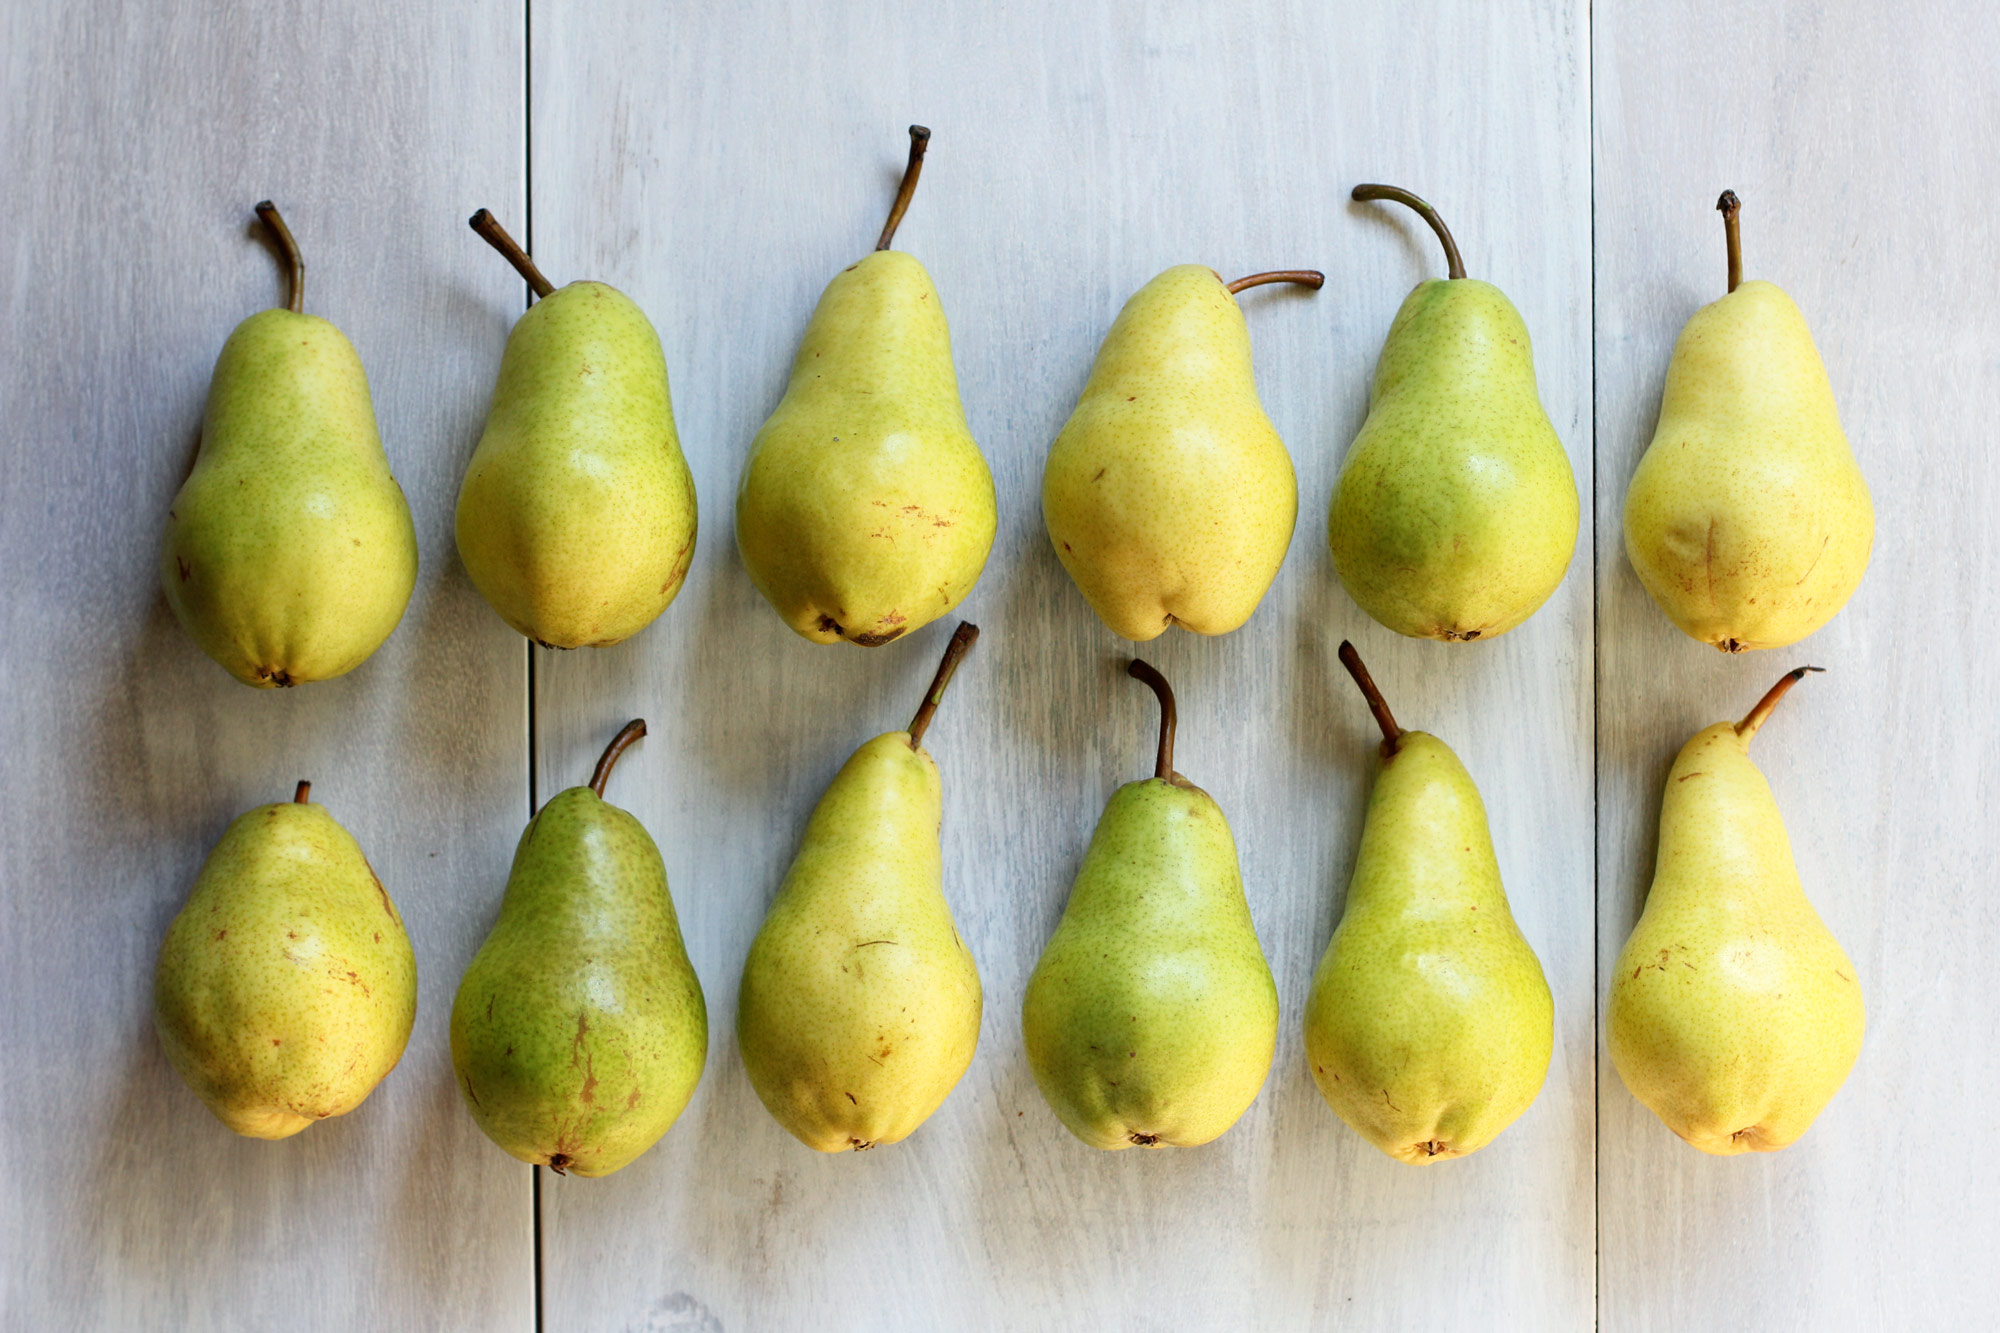 pears as a sugar subsitute